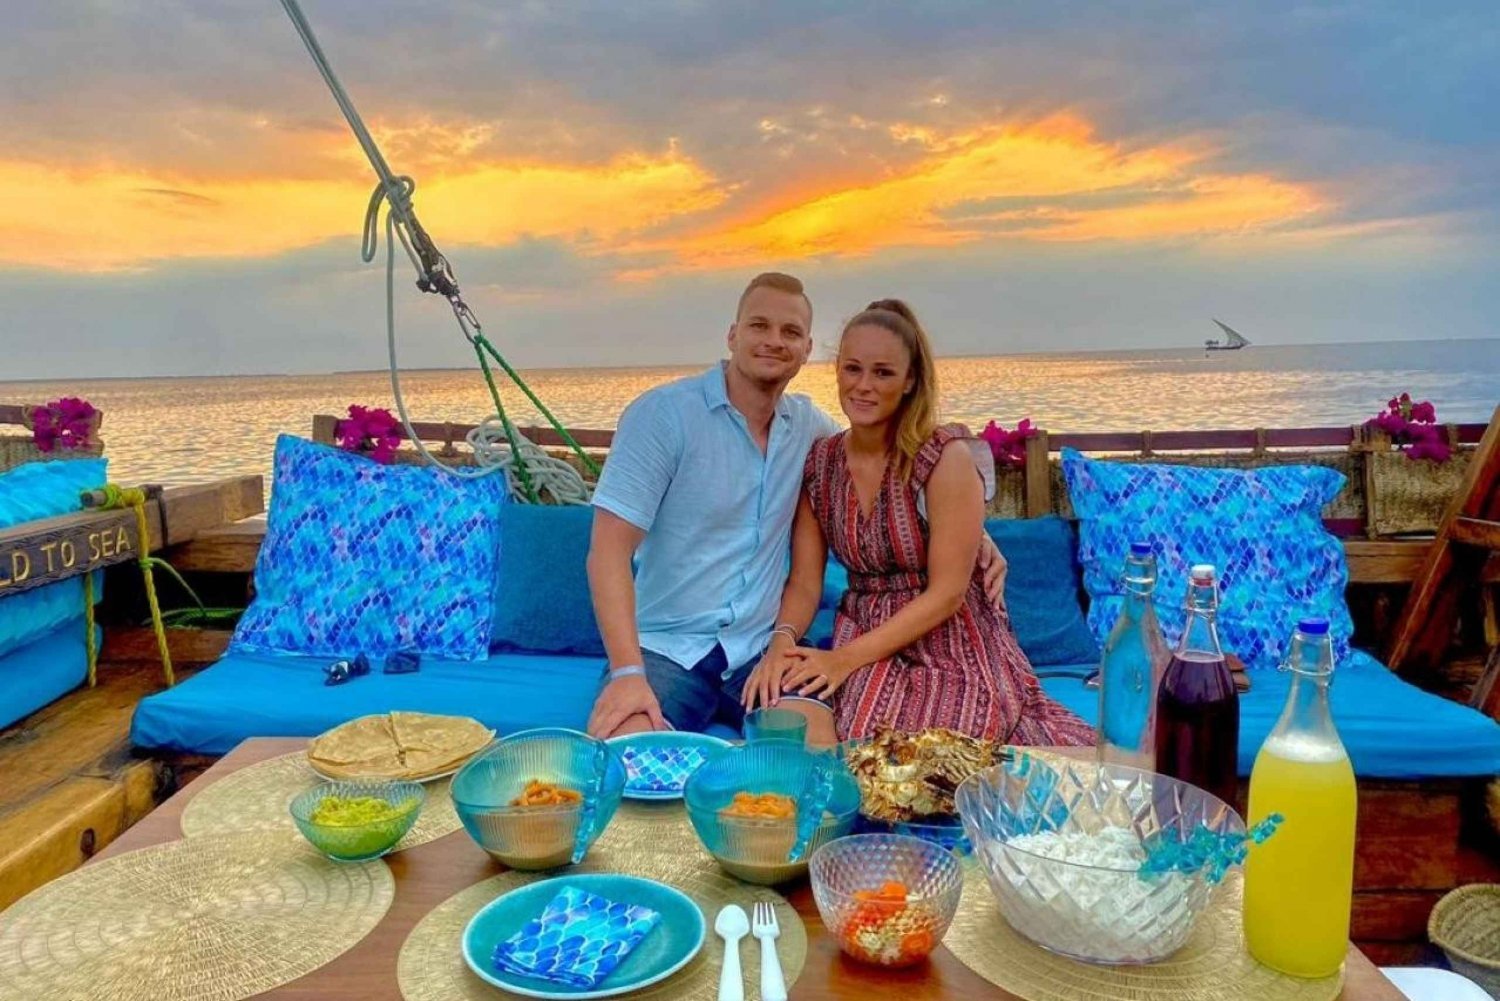 Zanzibar: Cruzeiro romântico ao pôr do sol com jantar